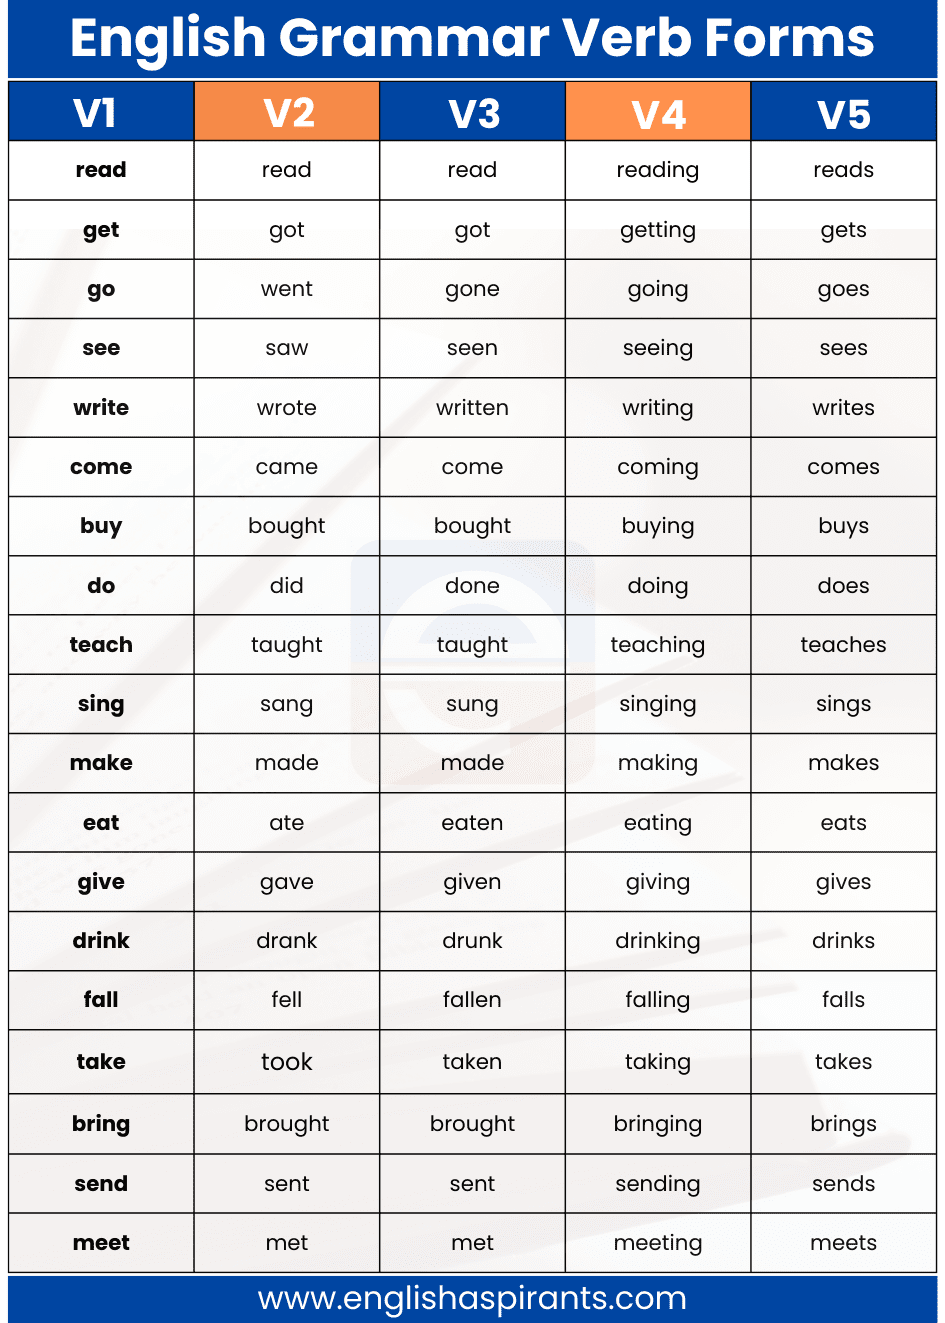 English Grammar Verb Forms V1 V2 V3 V4 V5 100 Words [Pdf]